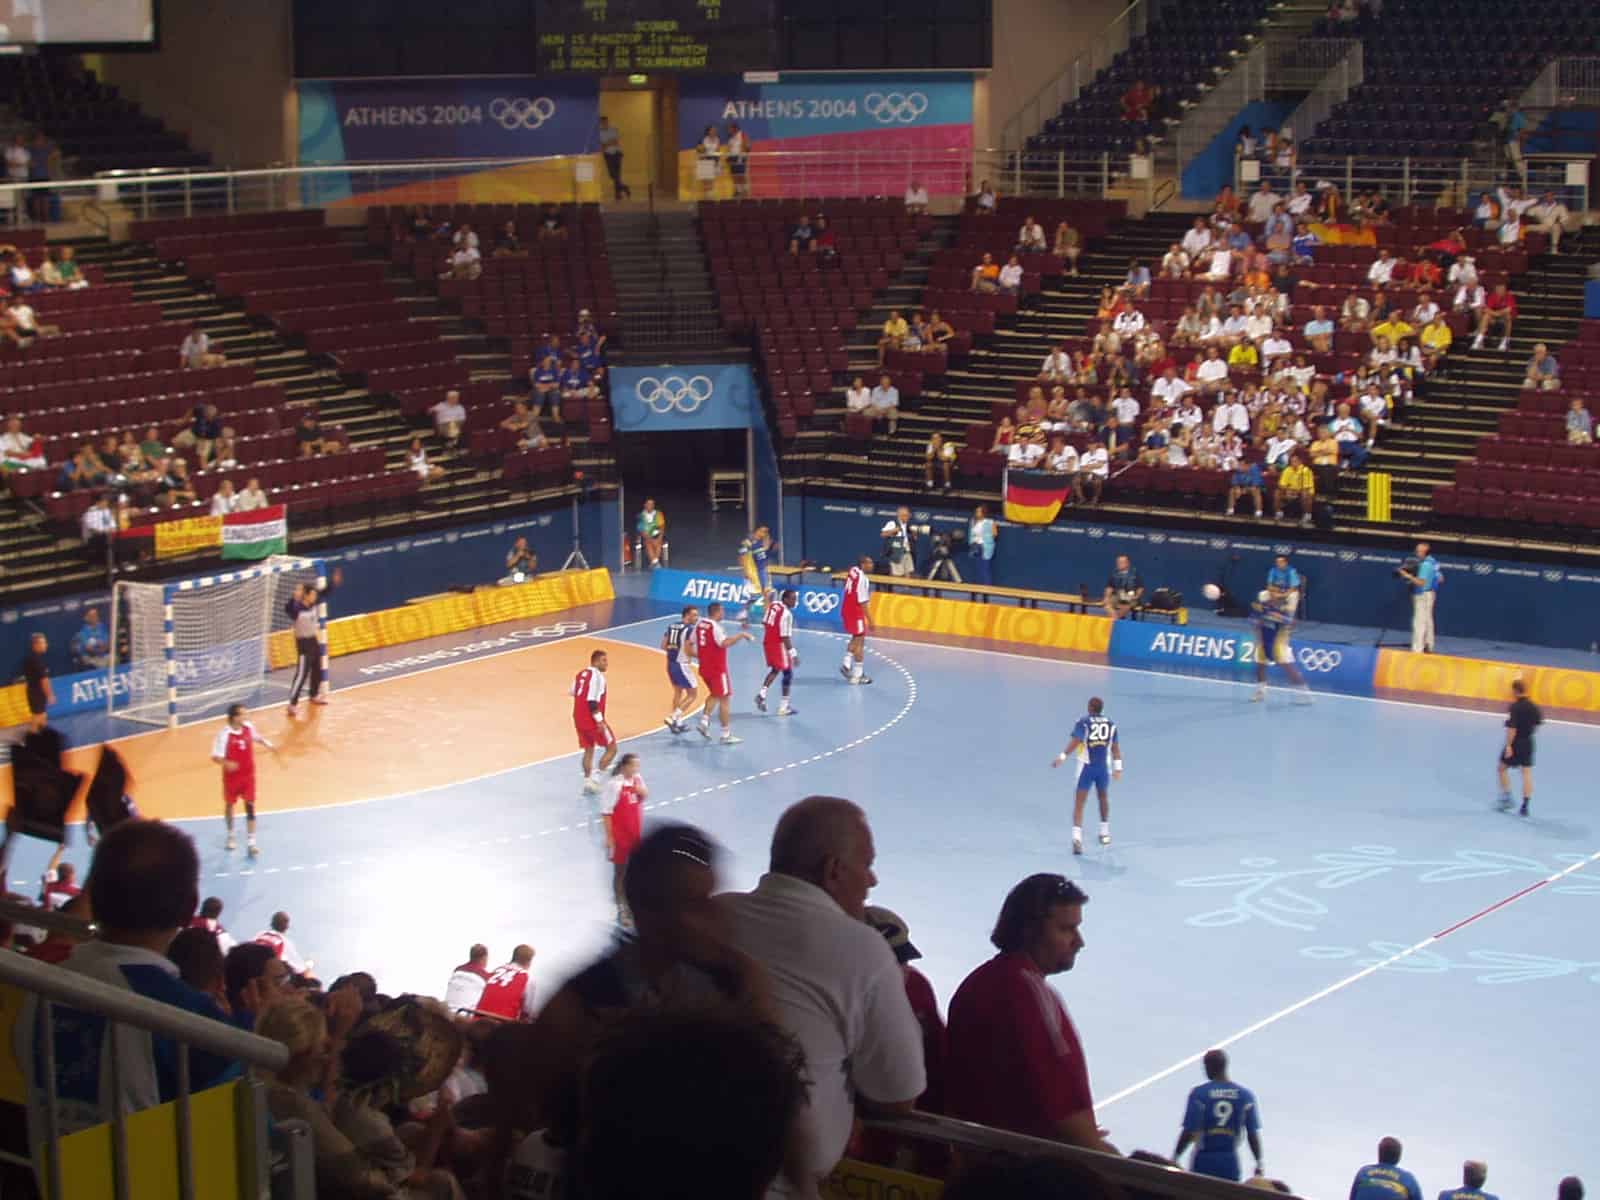 handball sport athens 2004 image page (3)